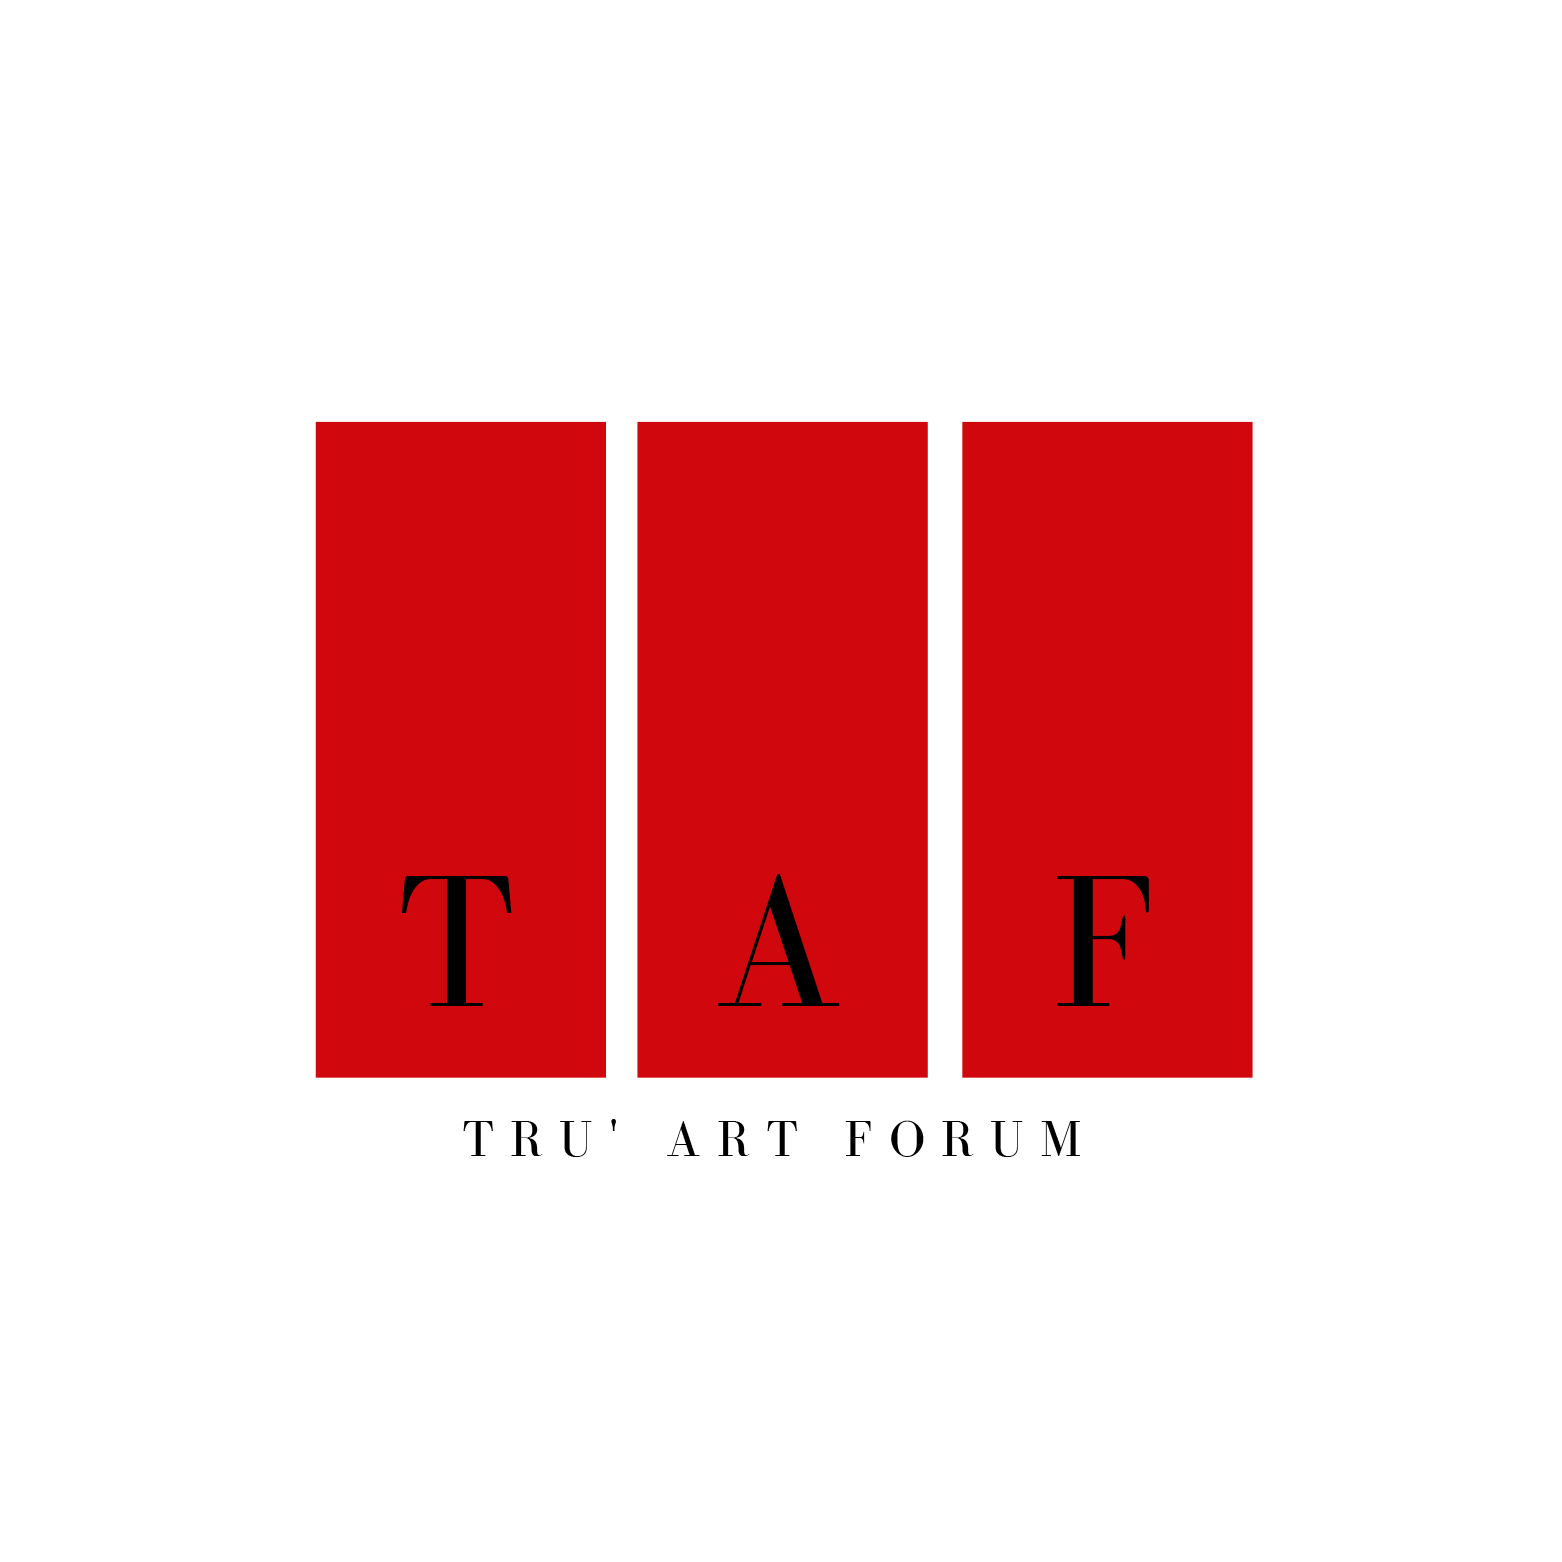 Tru' Art Forum - One Way Or The Others [Workshop Sài Gòn]